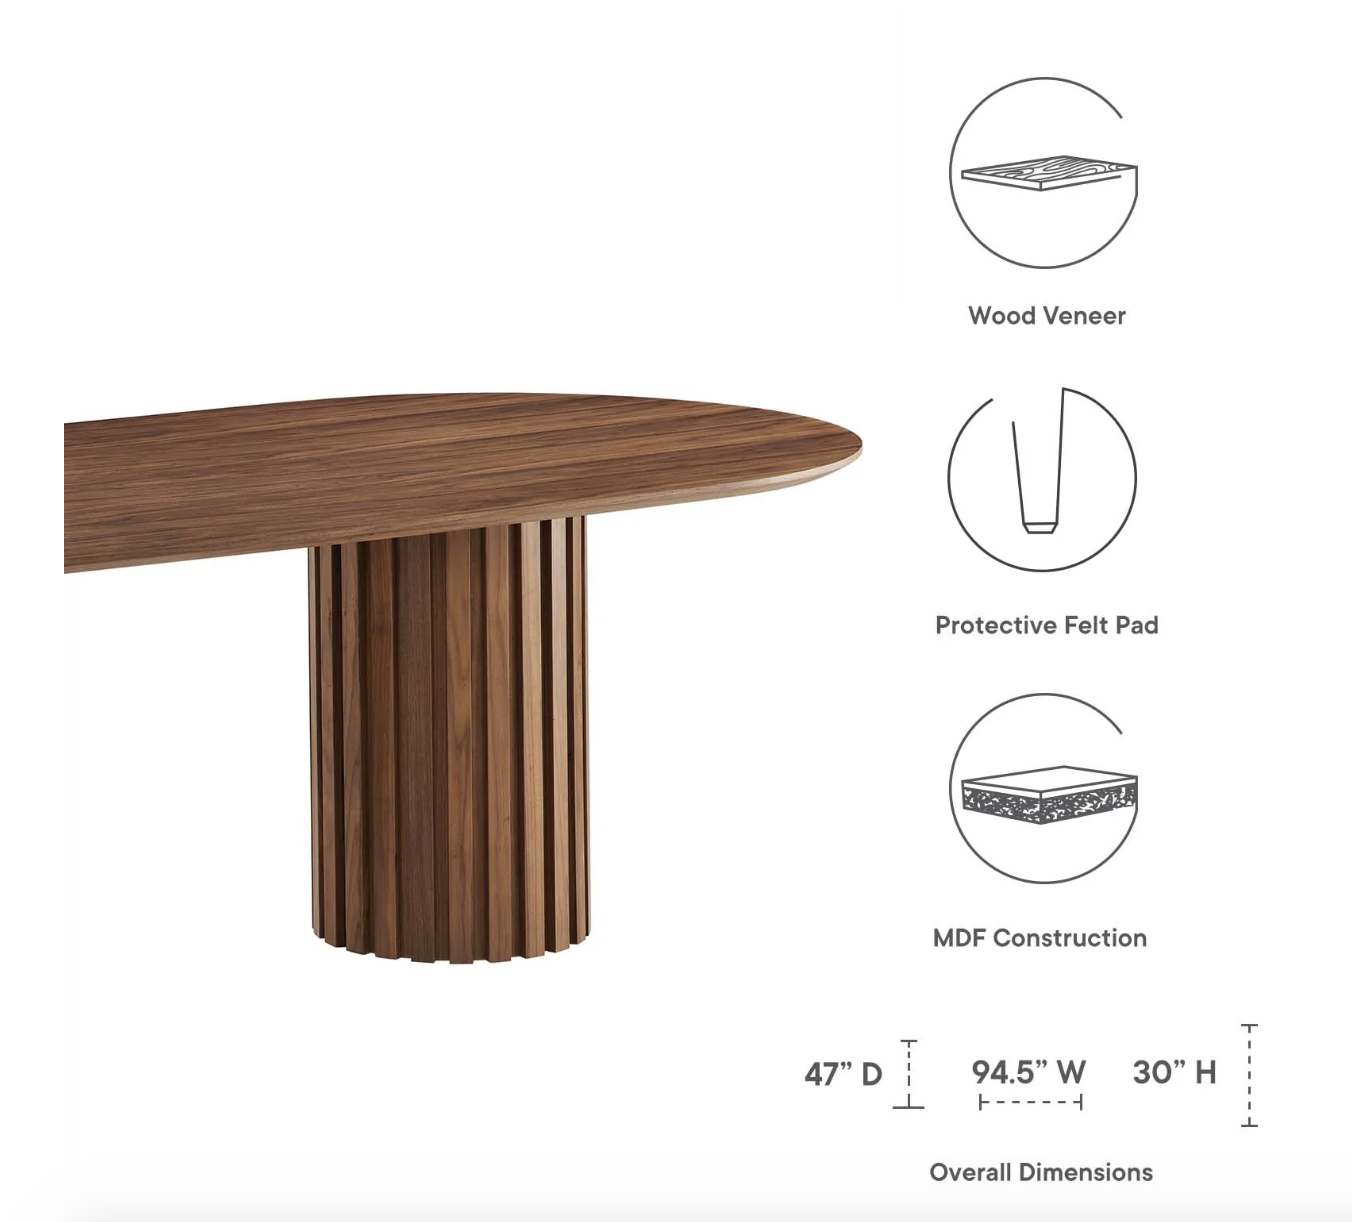 Senja Oval Dining Table - Walnut